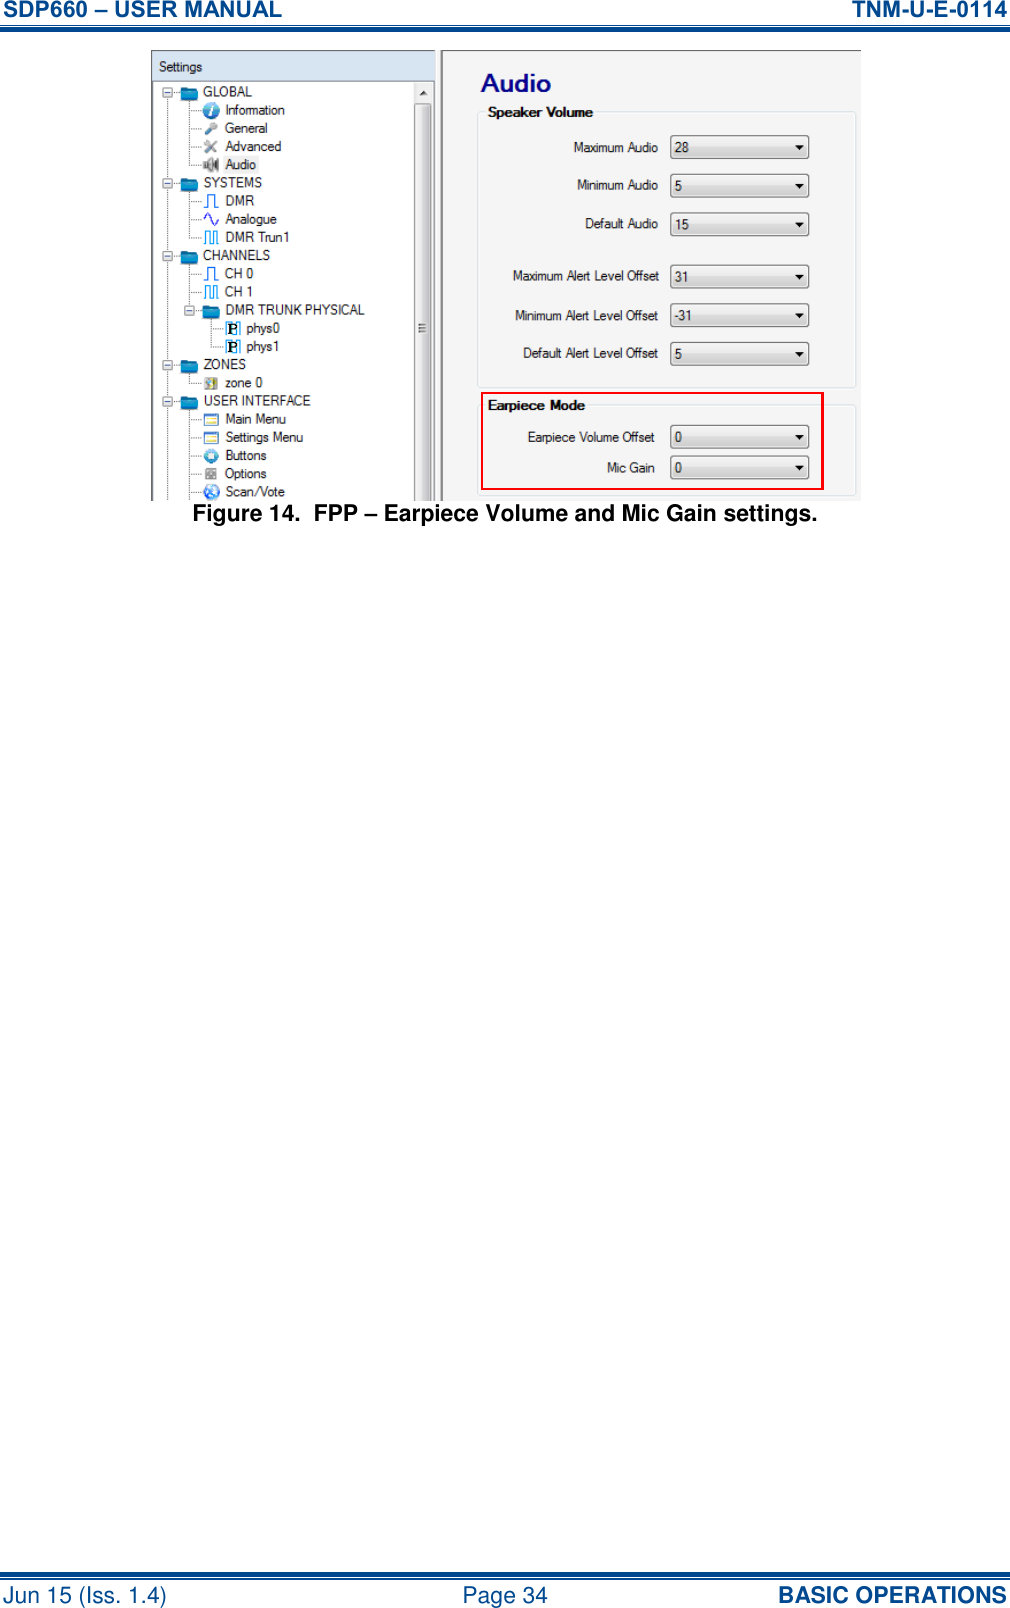 SDP660 – USER MANUAL  TNM-U-E-0114 Jun 15 (Iss. 1.4)  Page 34 BASIC OPERATIONS Figure 14.  FPP – Earpiece Volume and Mic Gain settings.     